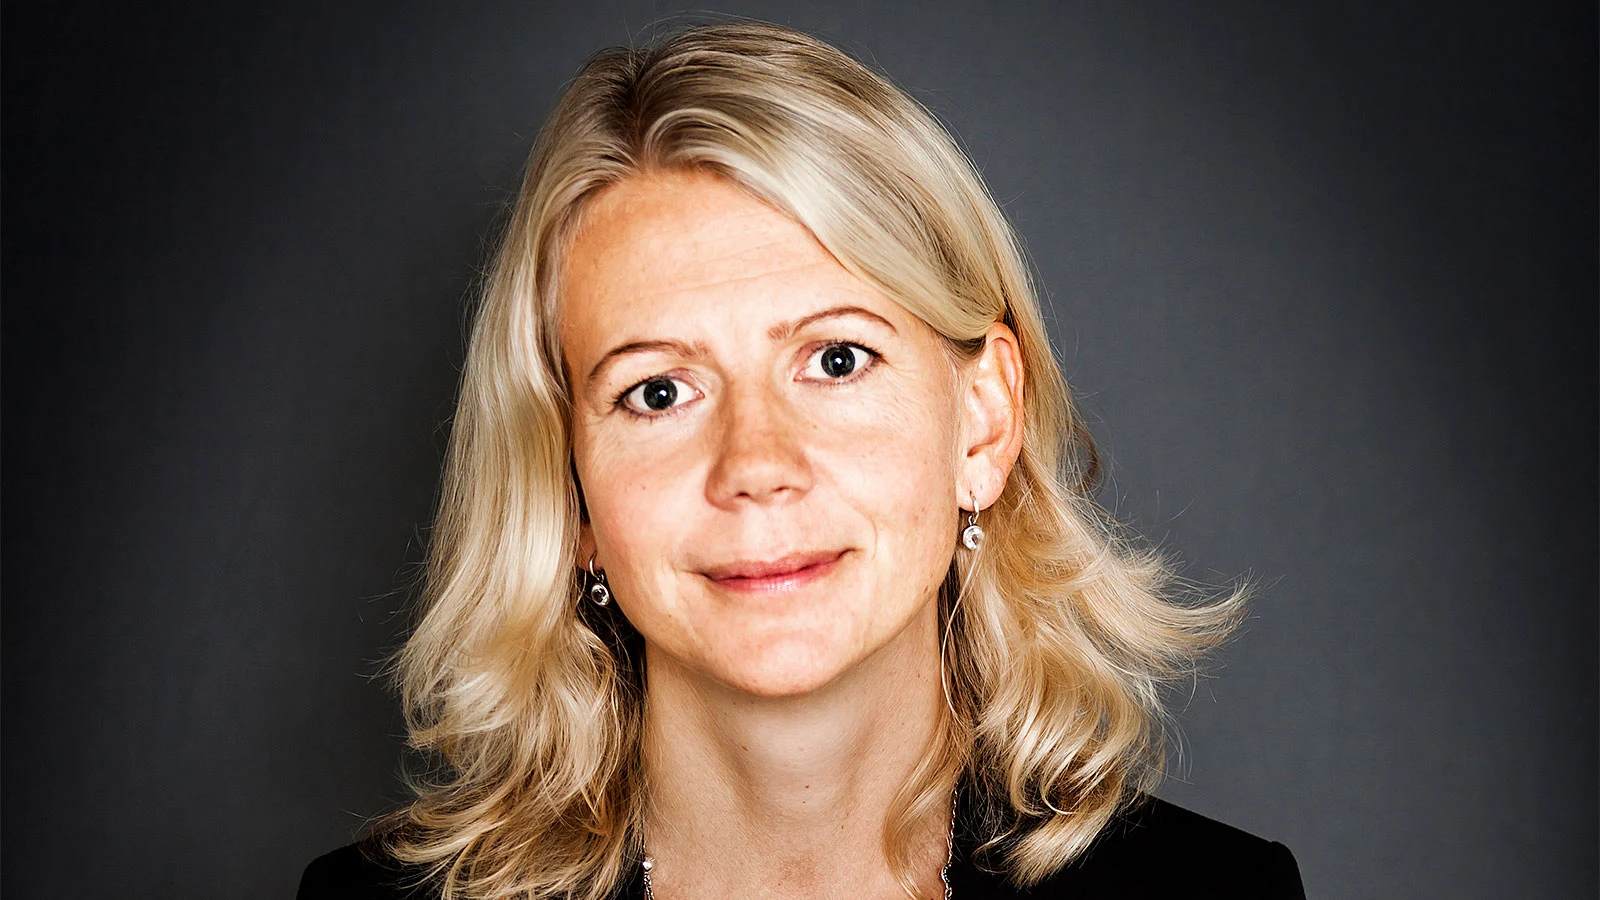 Cecilia Ask Engström